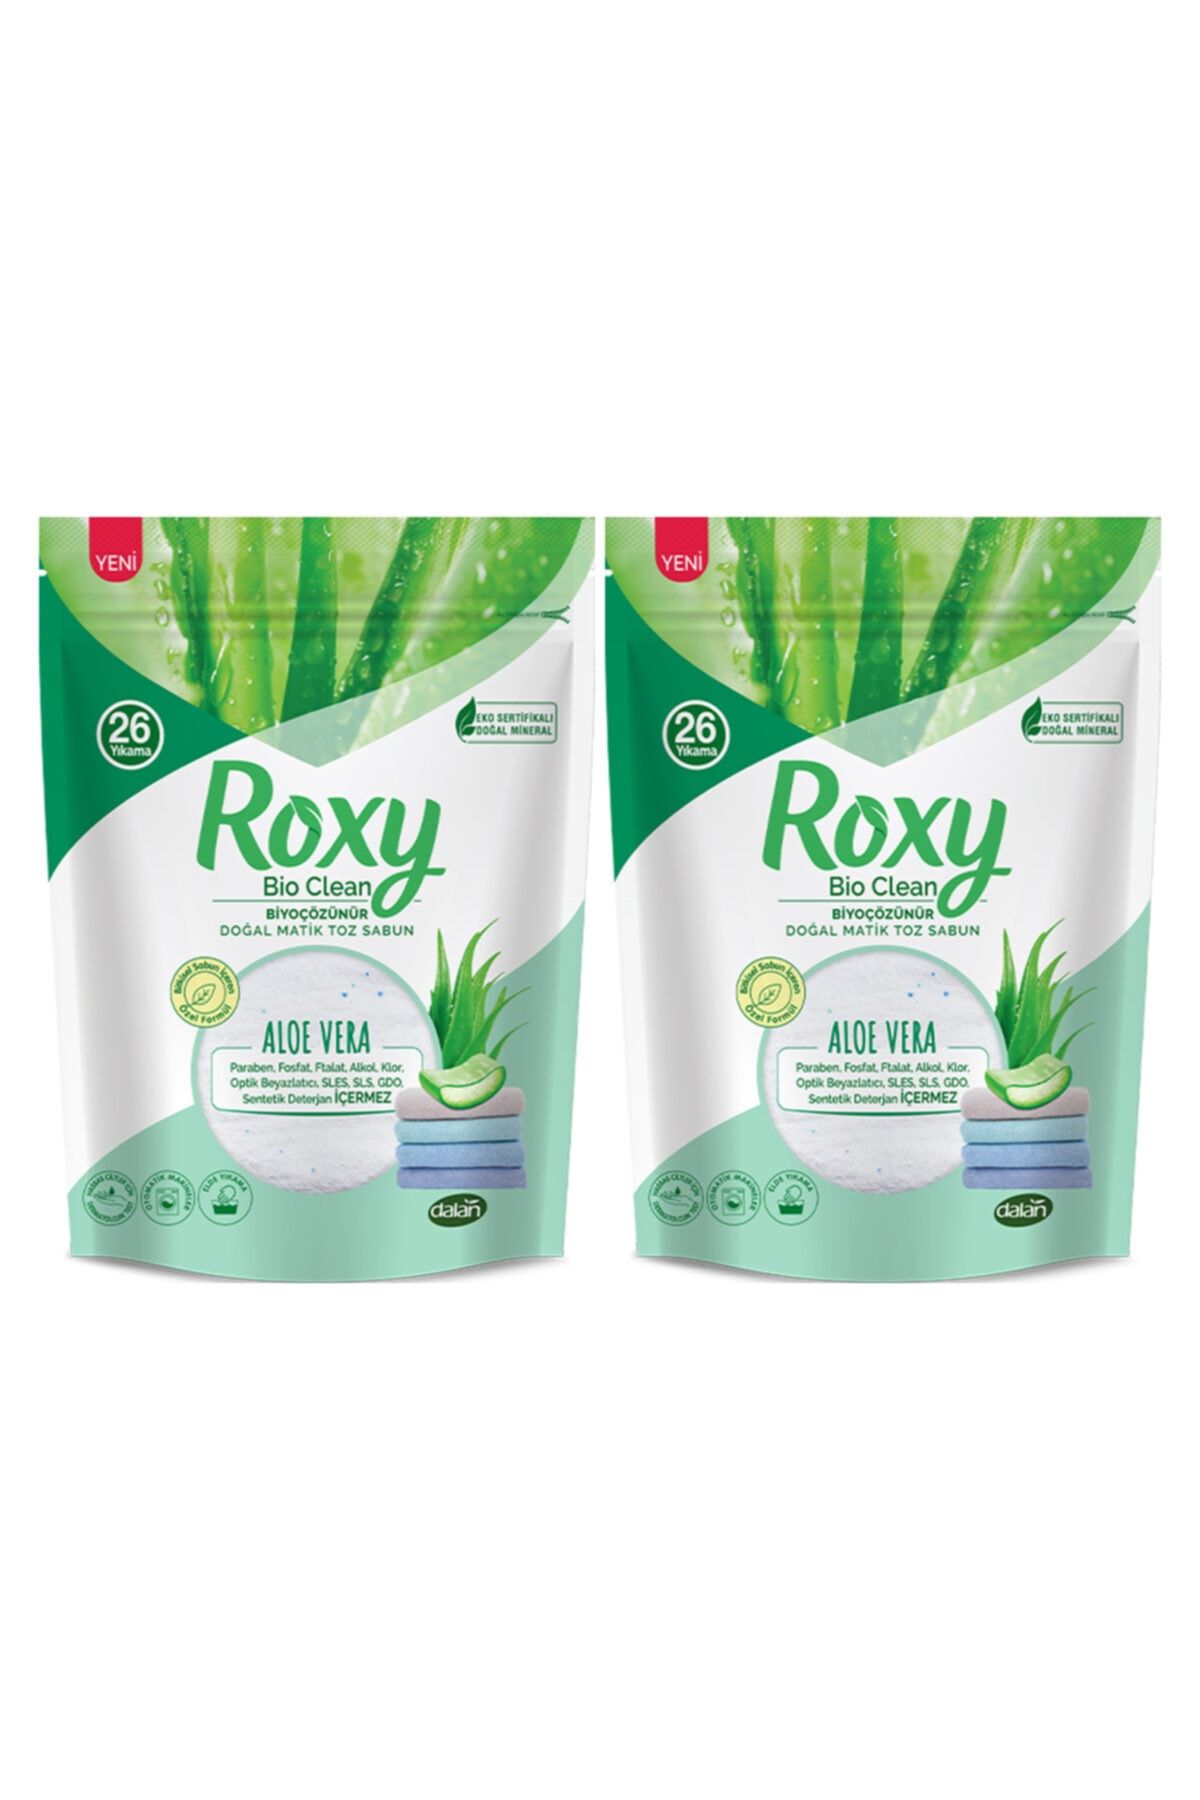 Dalan Roxy Bio Clean Sabun Tozu Aloe Vera 104 Yıkama 1.6 Kg 2 Paket